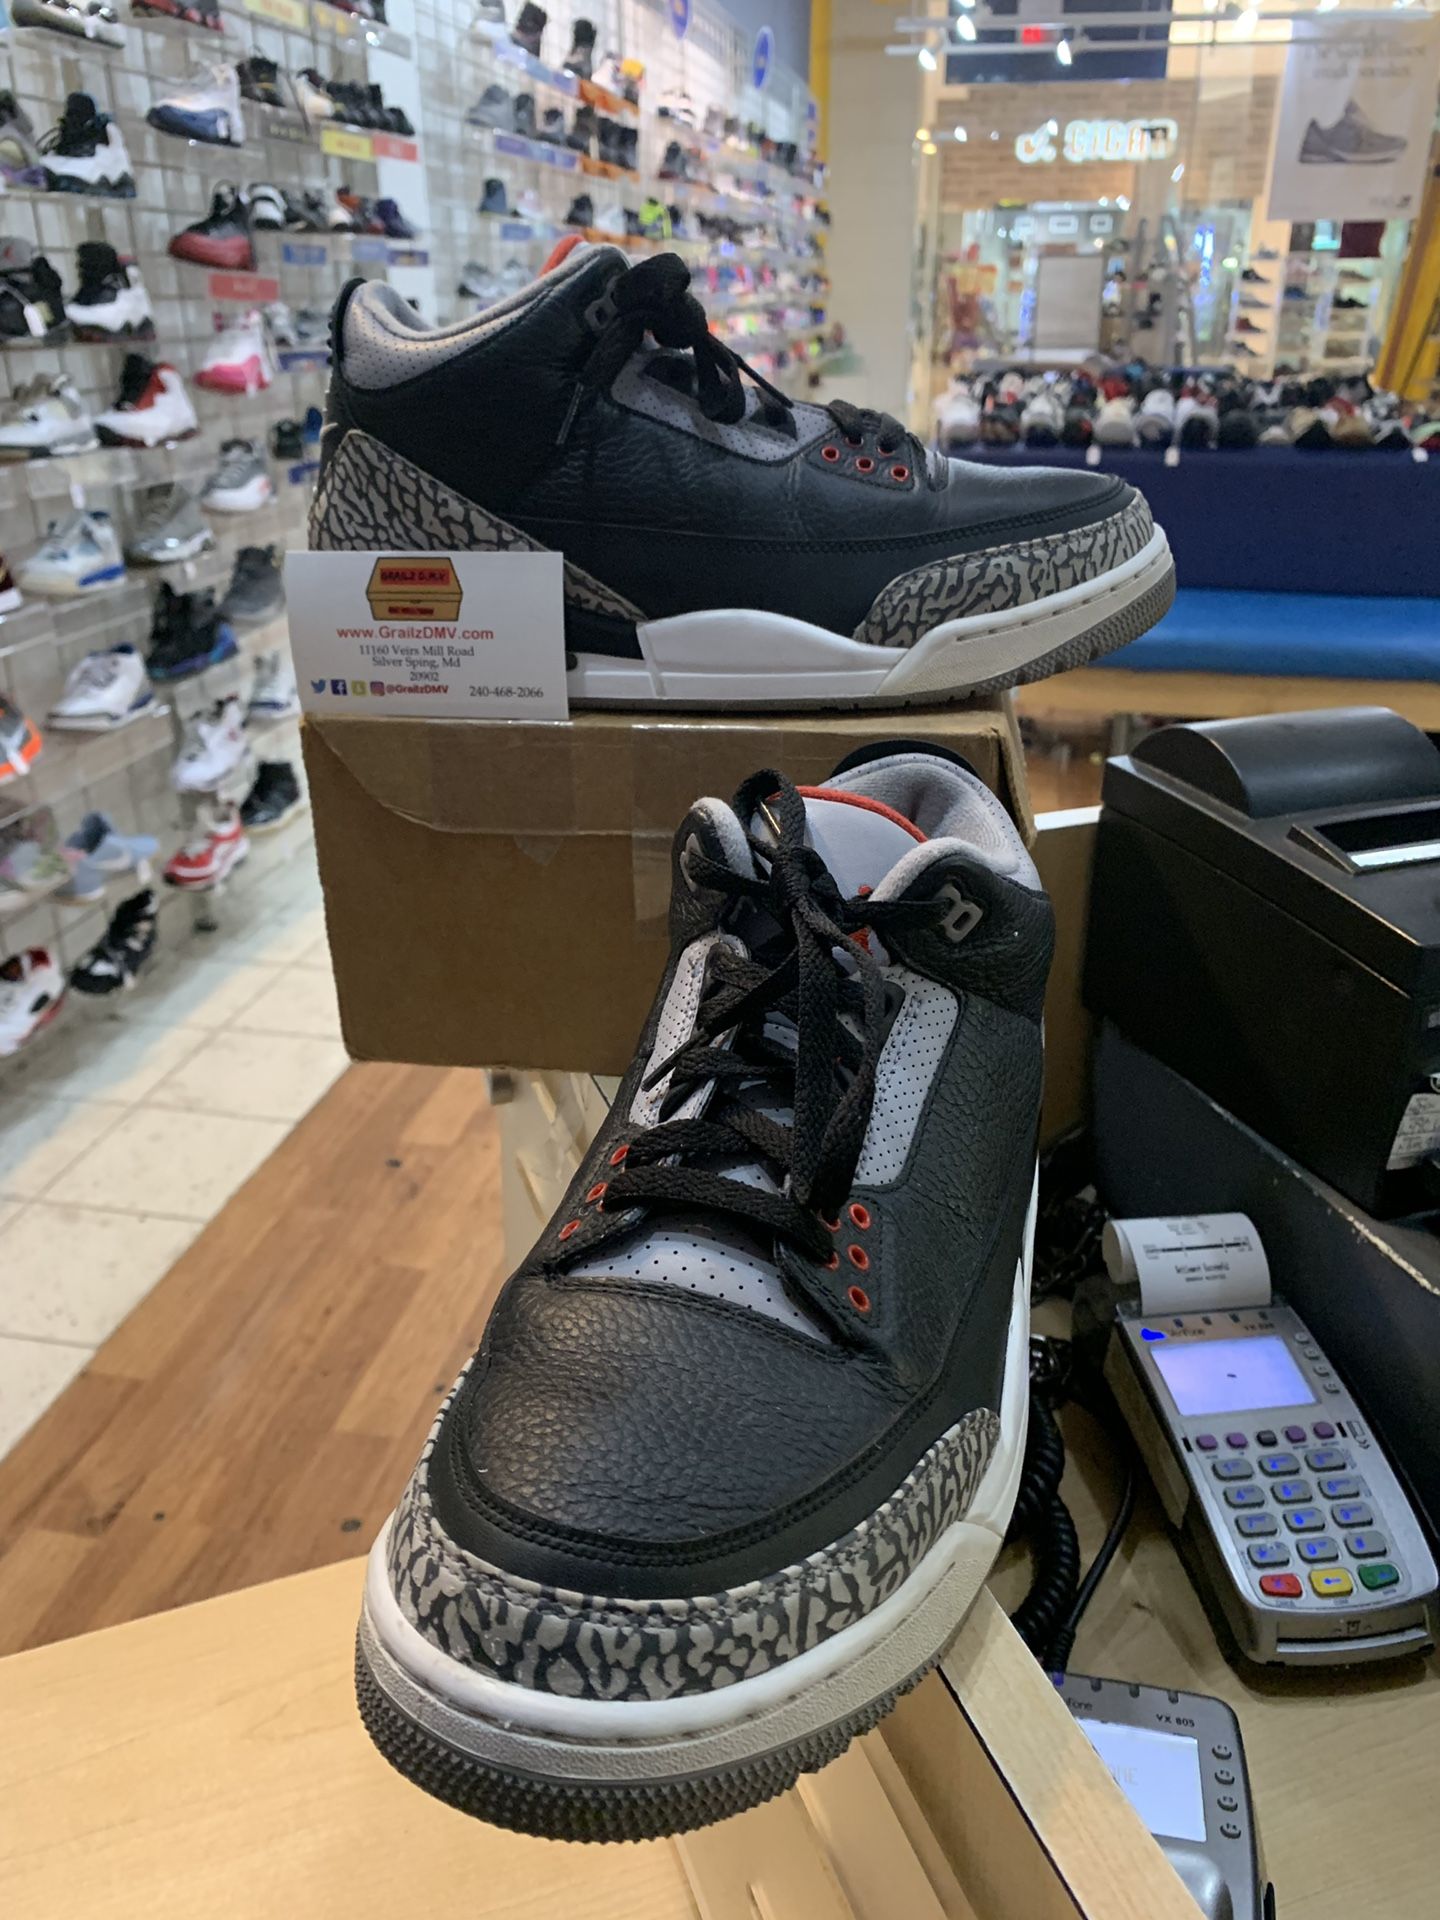 Air Jordan 3 OG Black Cement 2018 Size 10